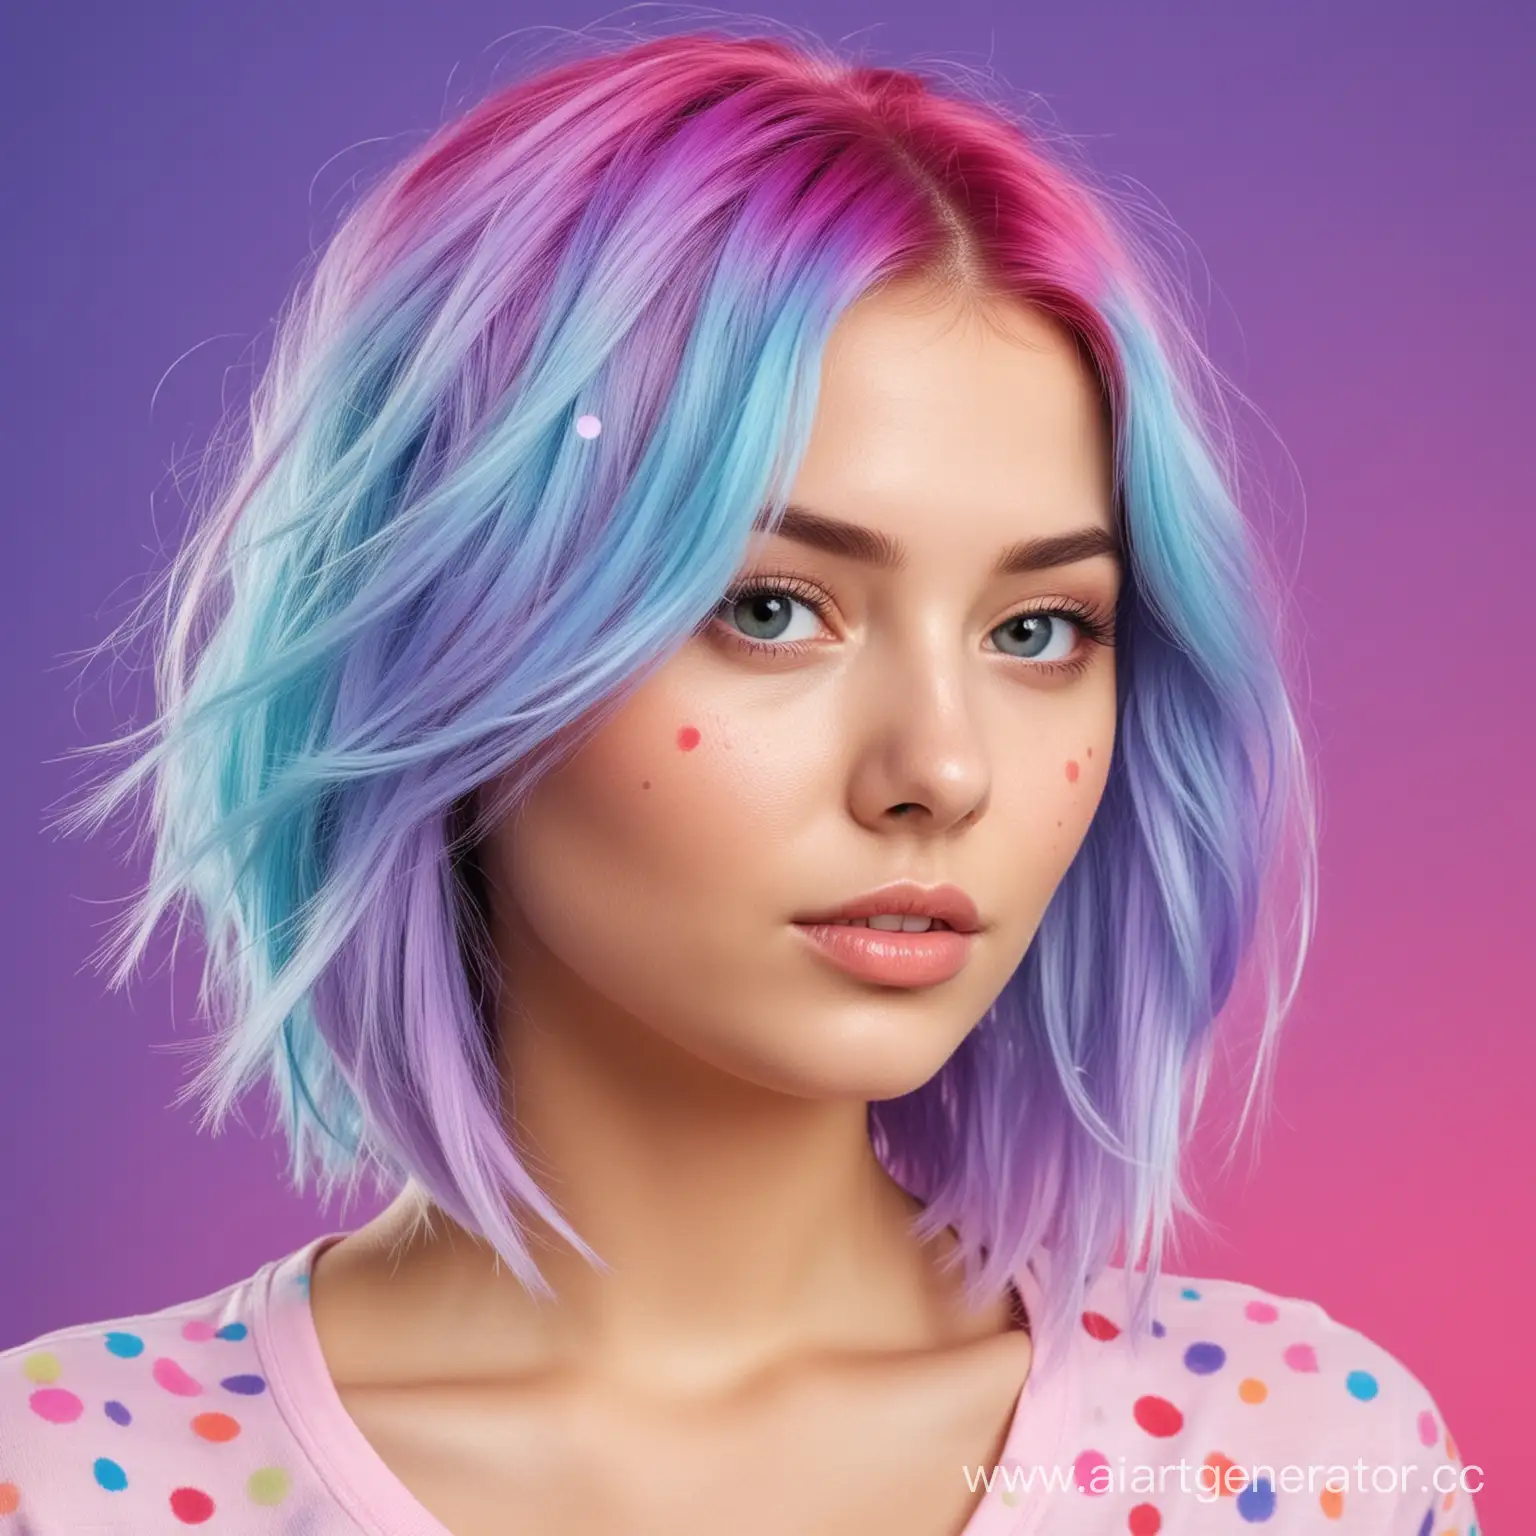 Vibrant-Hair-Dye-Inspiration-with-Artistic-Paint-Splatters